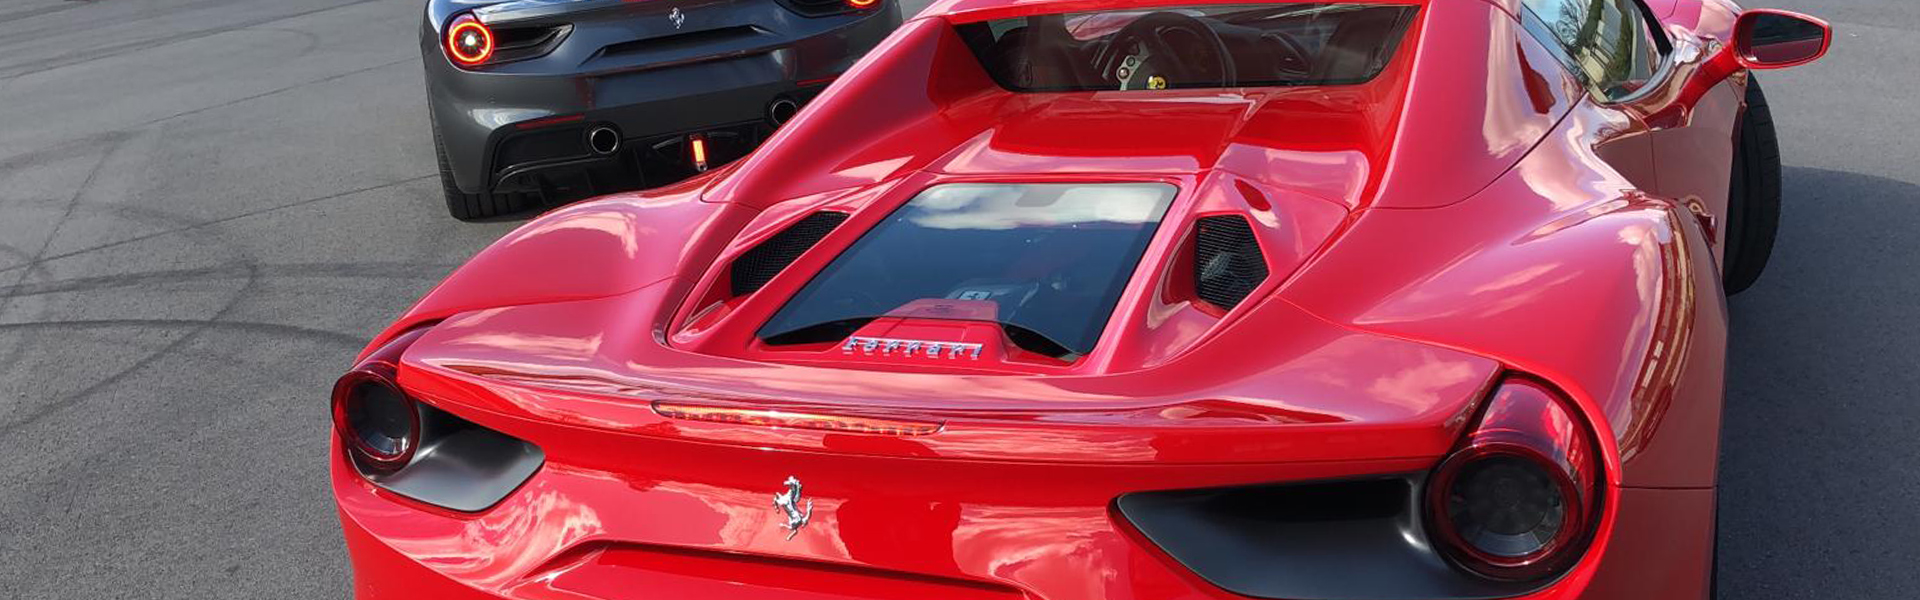 Version 2 Capristo Ferrari engine bonnet for the 488 Spider